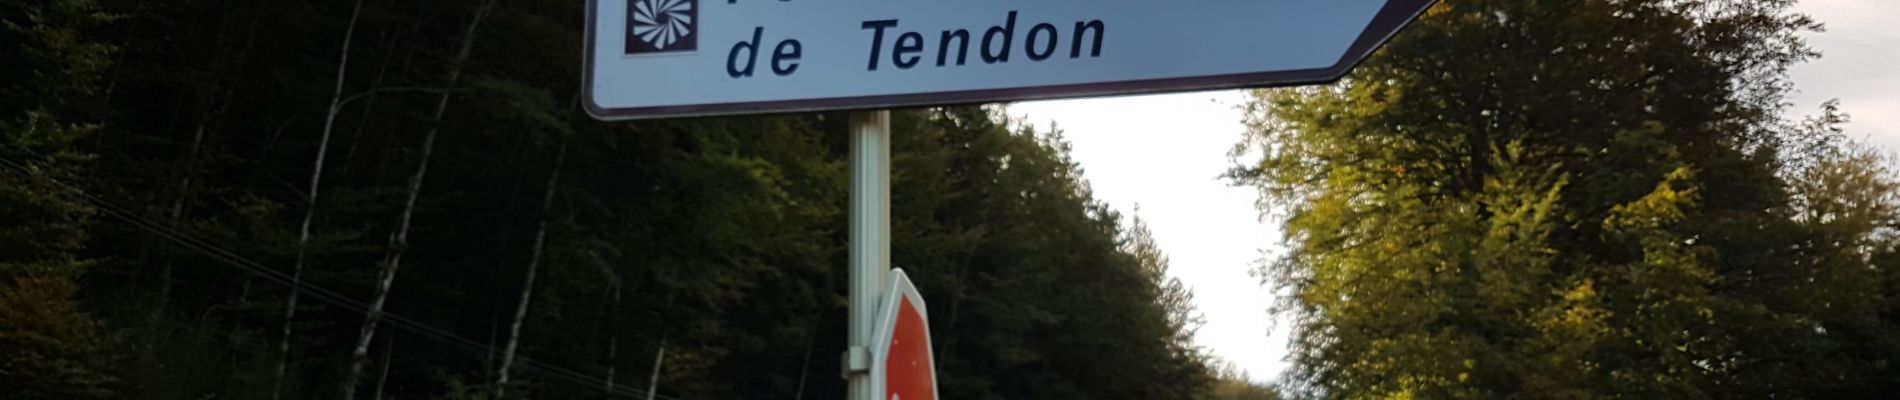 Percorso Marcia Tendon - Cascades de Tendon - Trou de l'Enfer - Roches de la Moulure - Photo